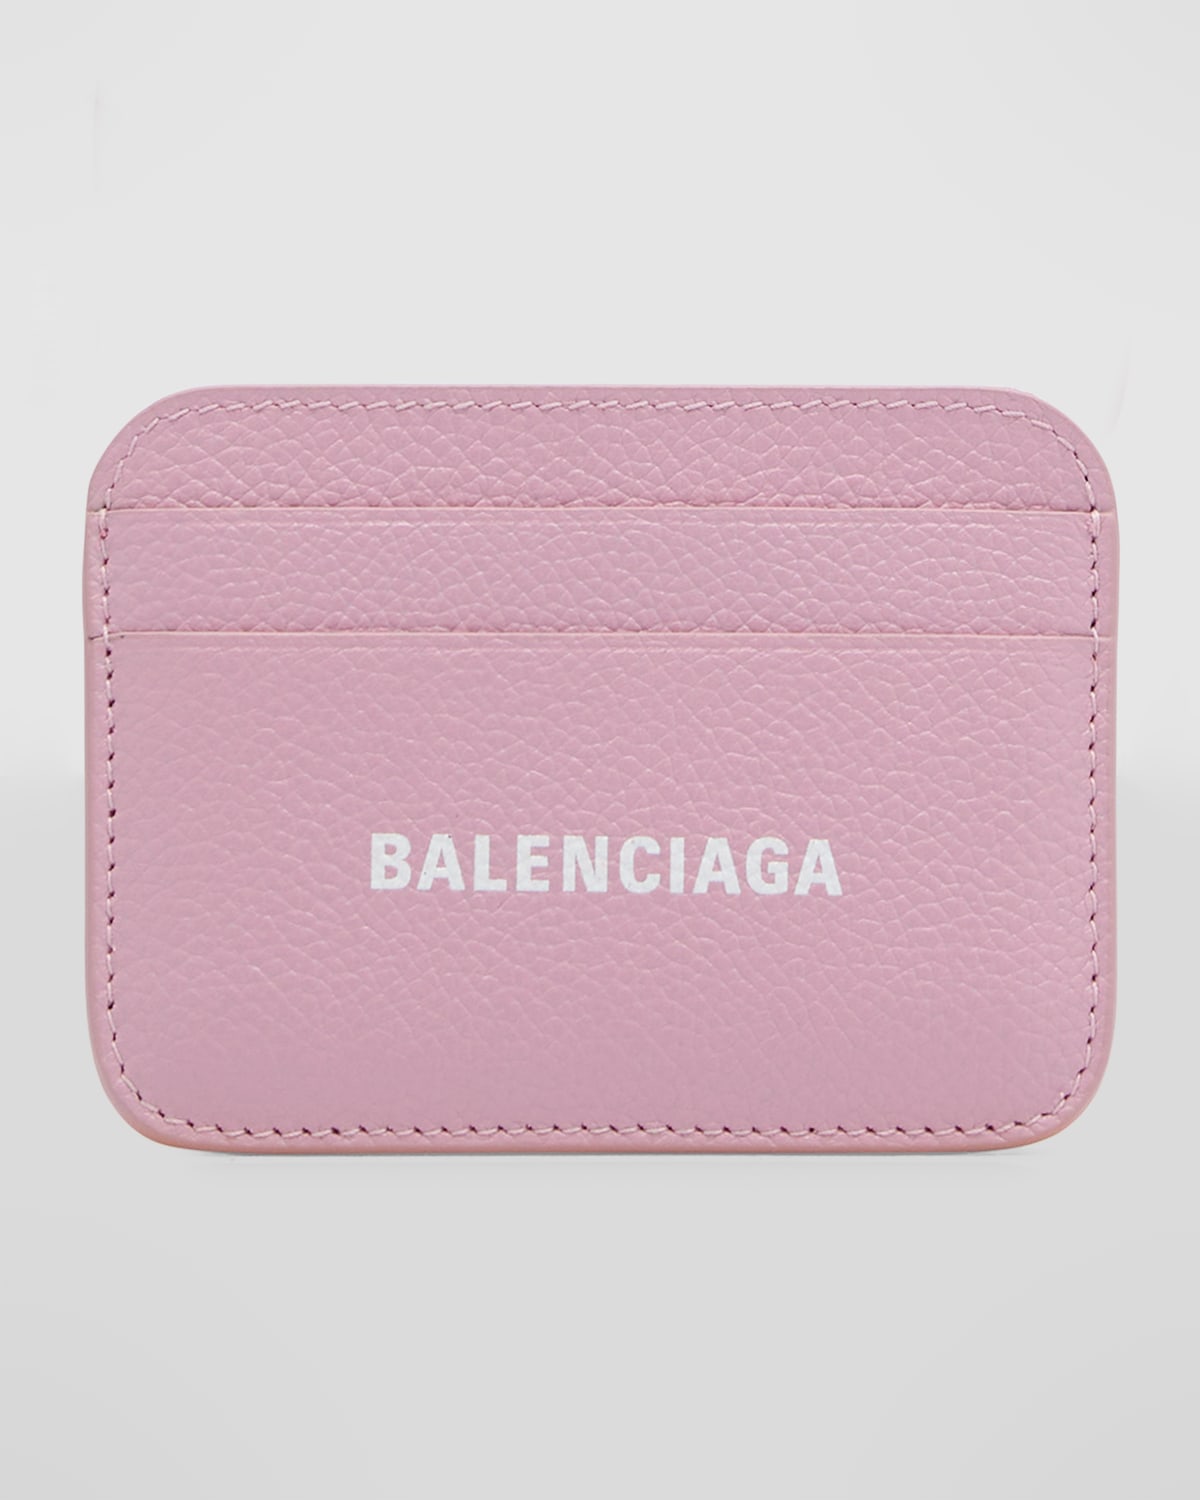 BALENCIAGA CASH CARD HOLDER - GRAINED CALF